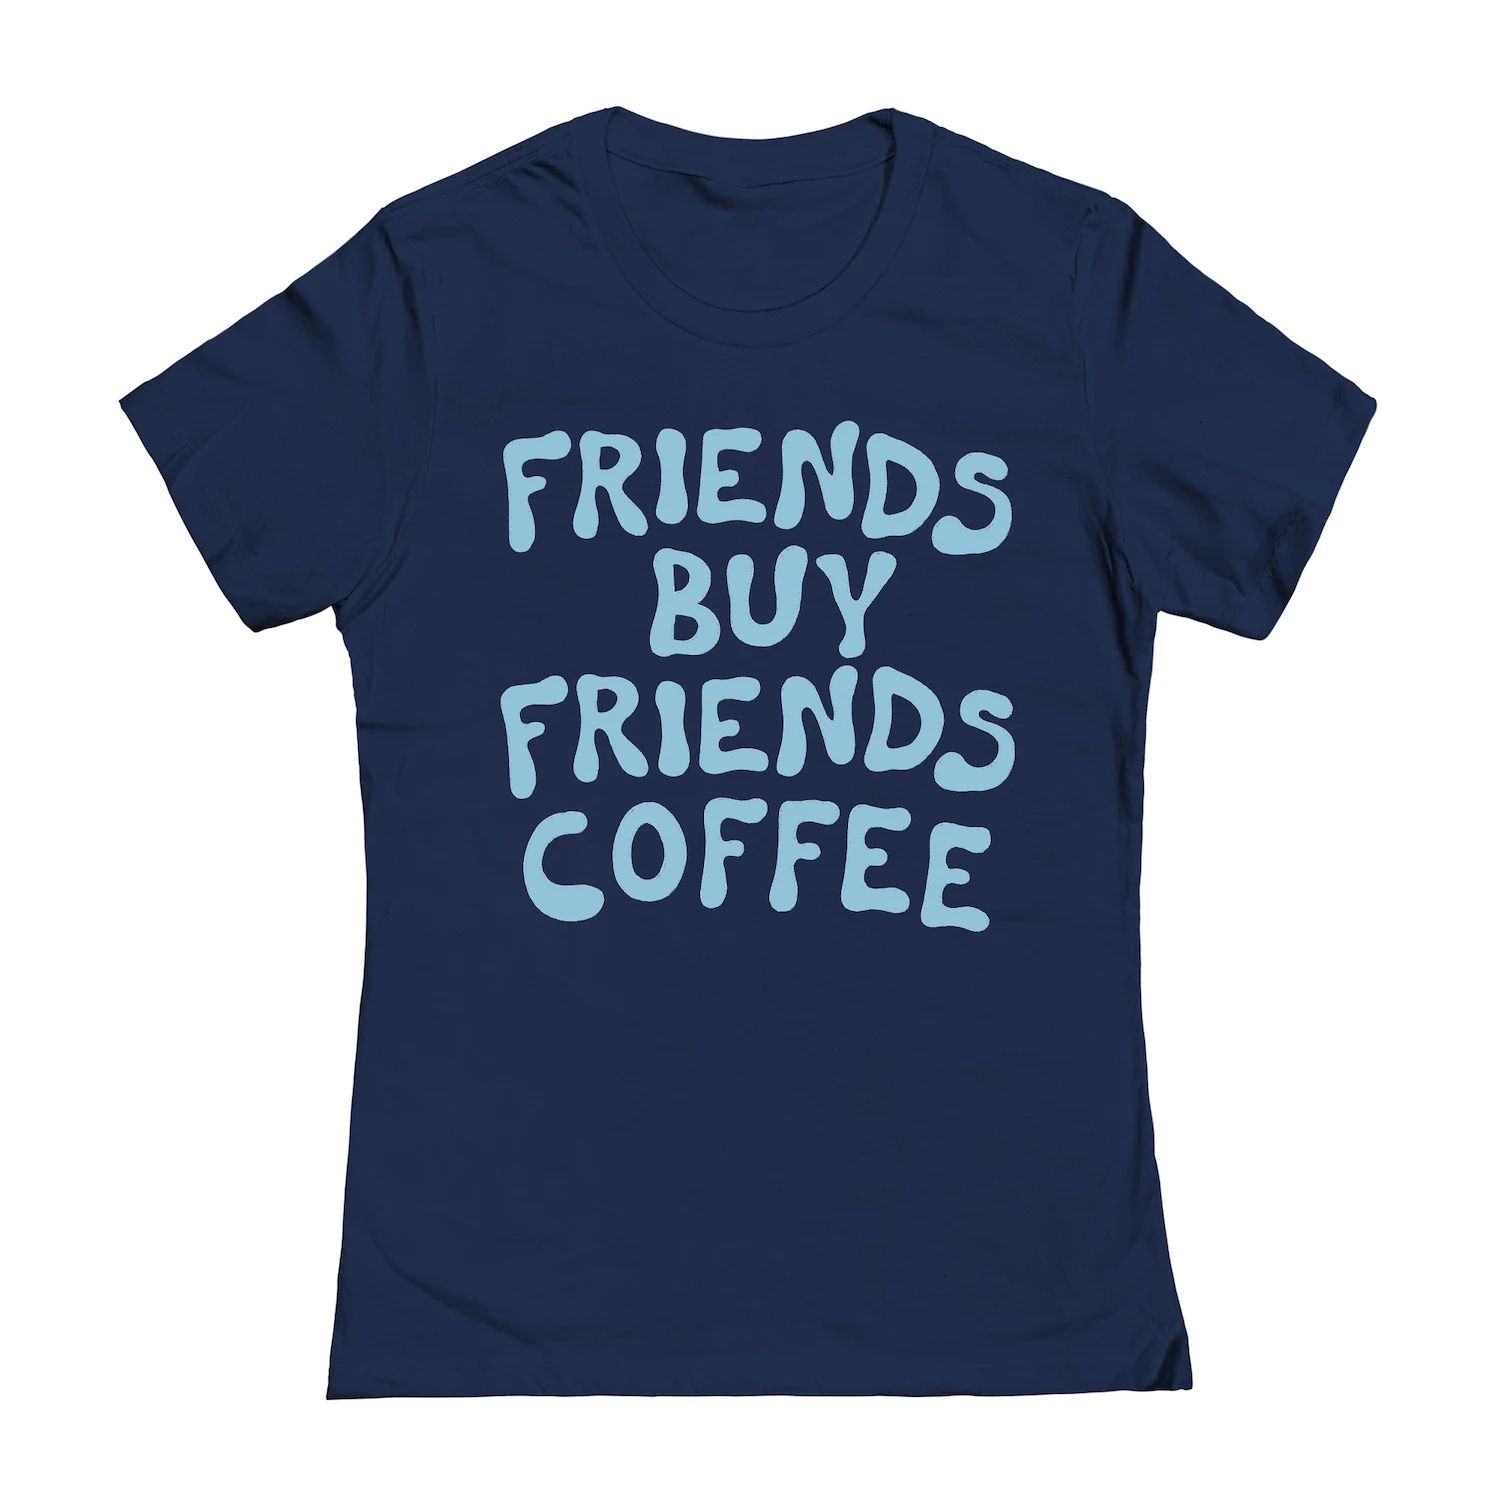 Юниорская футболка Nathan W Pyle Friends Buy с рисунком кофе Licensed Character